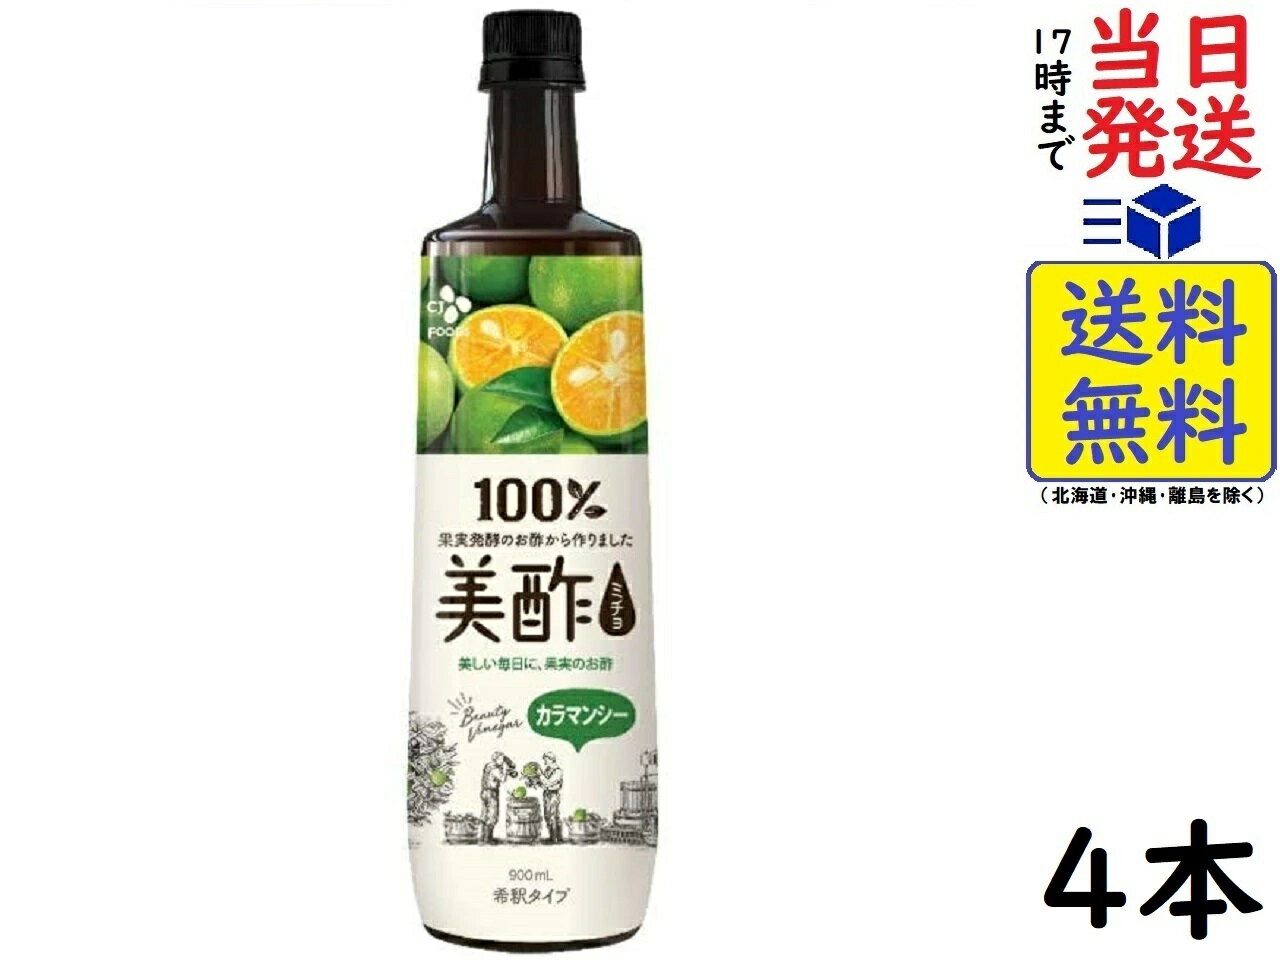 CJ FOODS JAPAN ミチョ 美酢 カラマンシー 900ml ×4本賞味期限2025/02/11